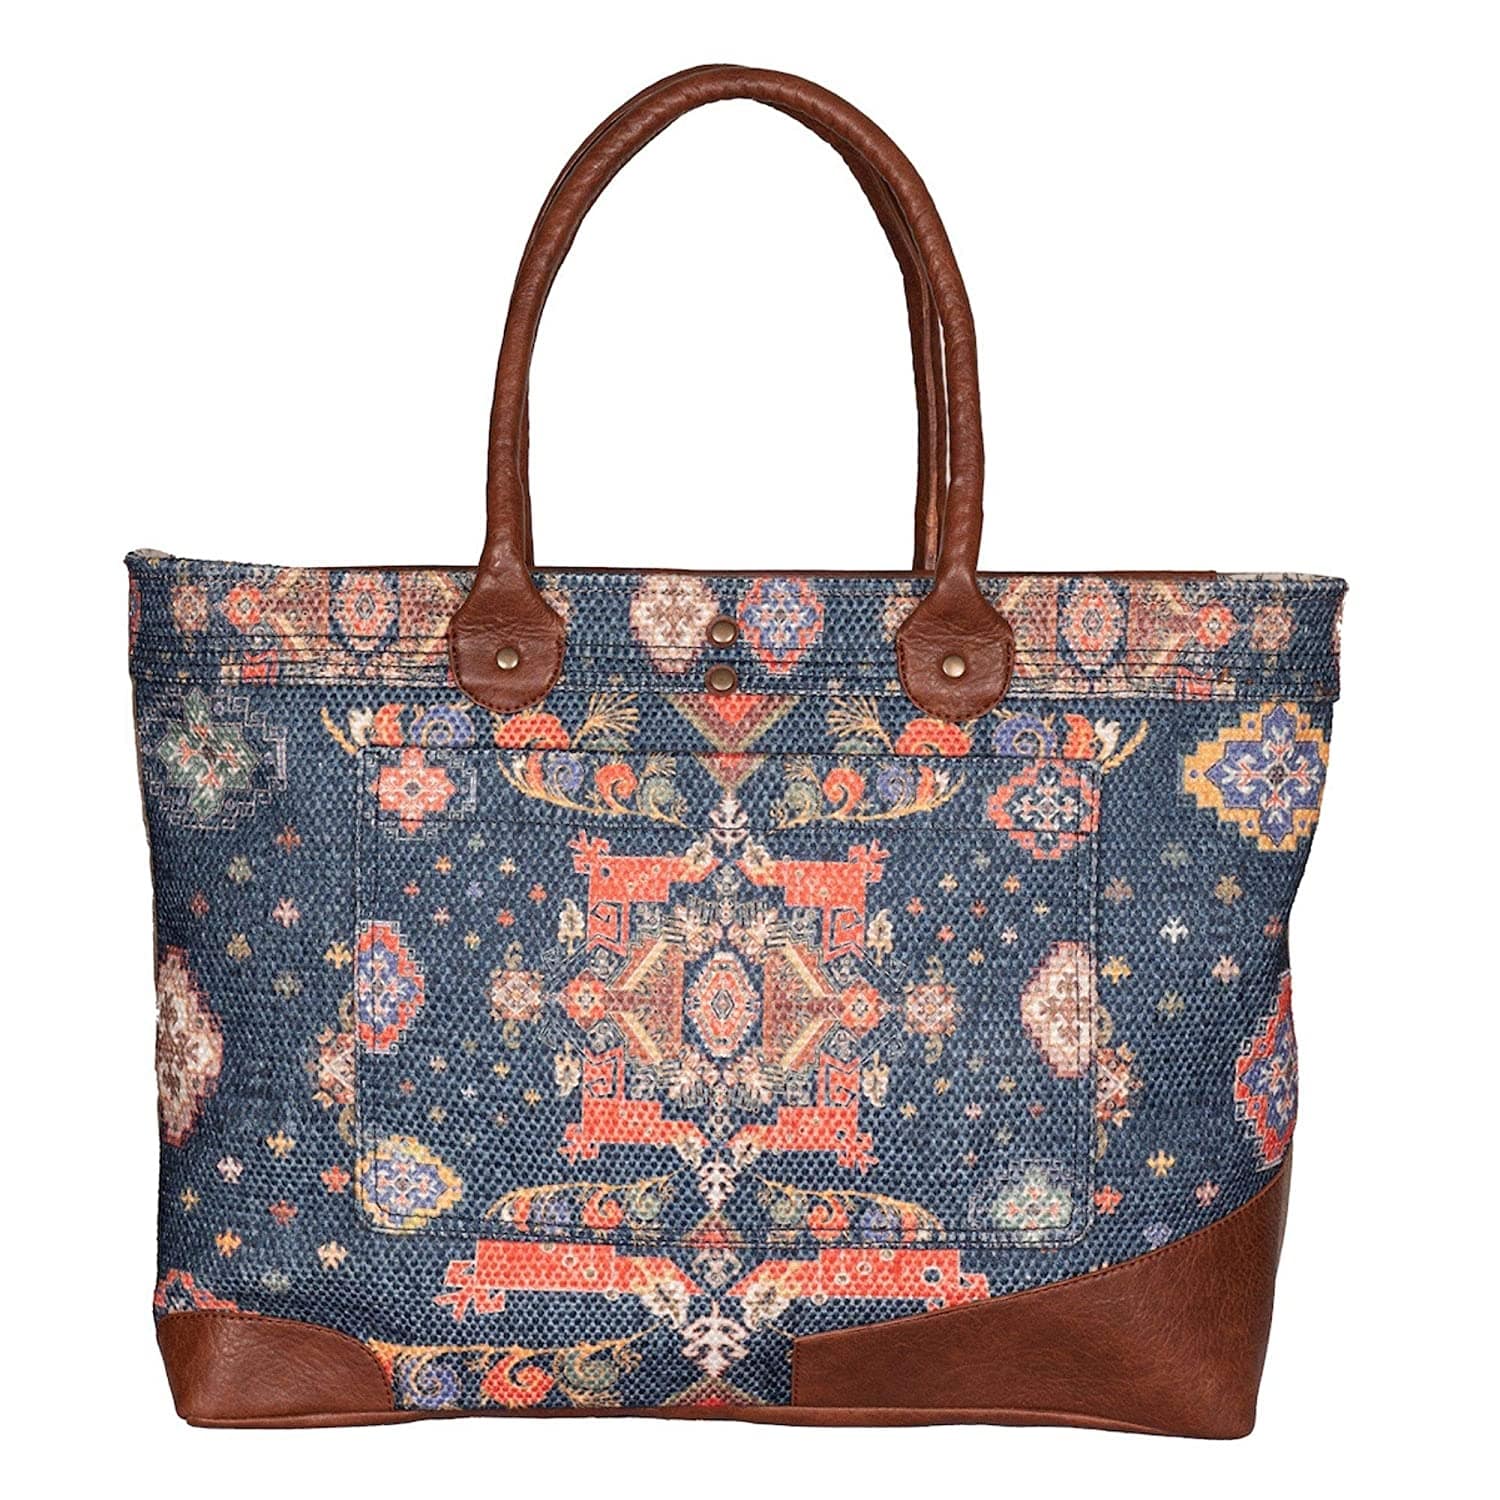 Mona-B Bag Mona B Large Canvas Handbag for Women | Zipper Tote Bag | Crossbody Bag for Grocery, Shopping, Travel | Stylish Vintage Shoulder Bags for Women (Skyler)